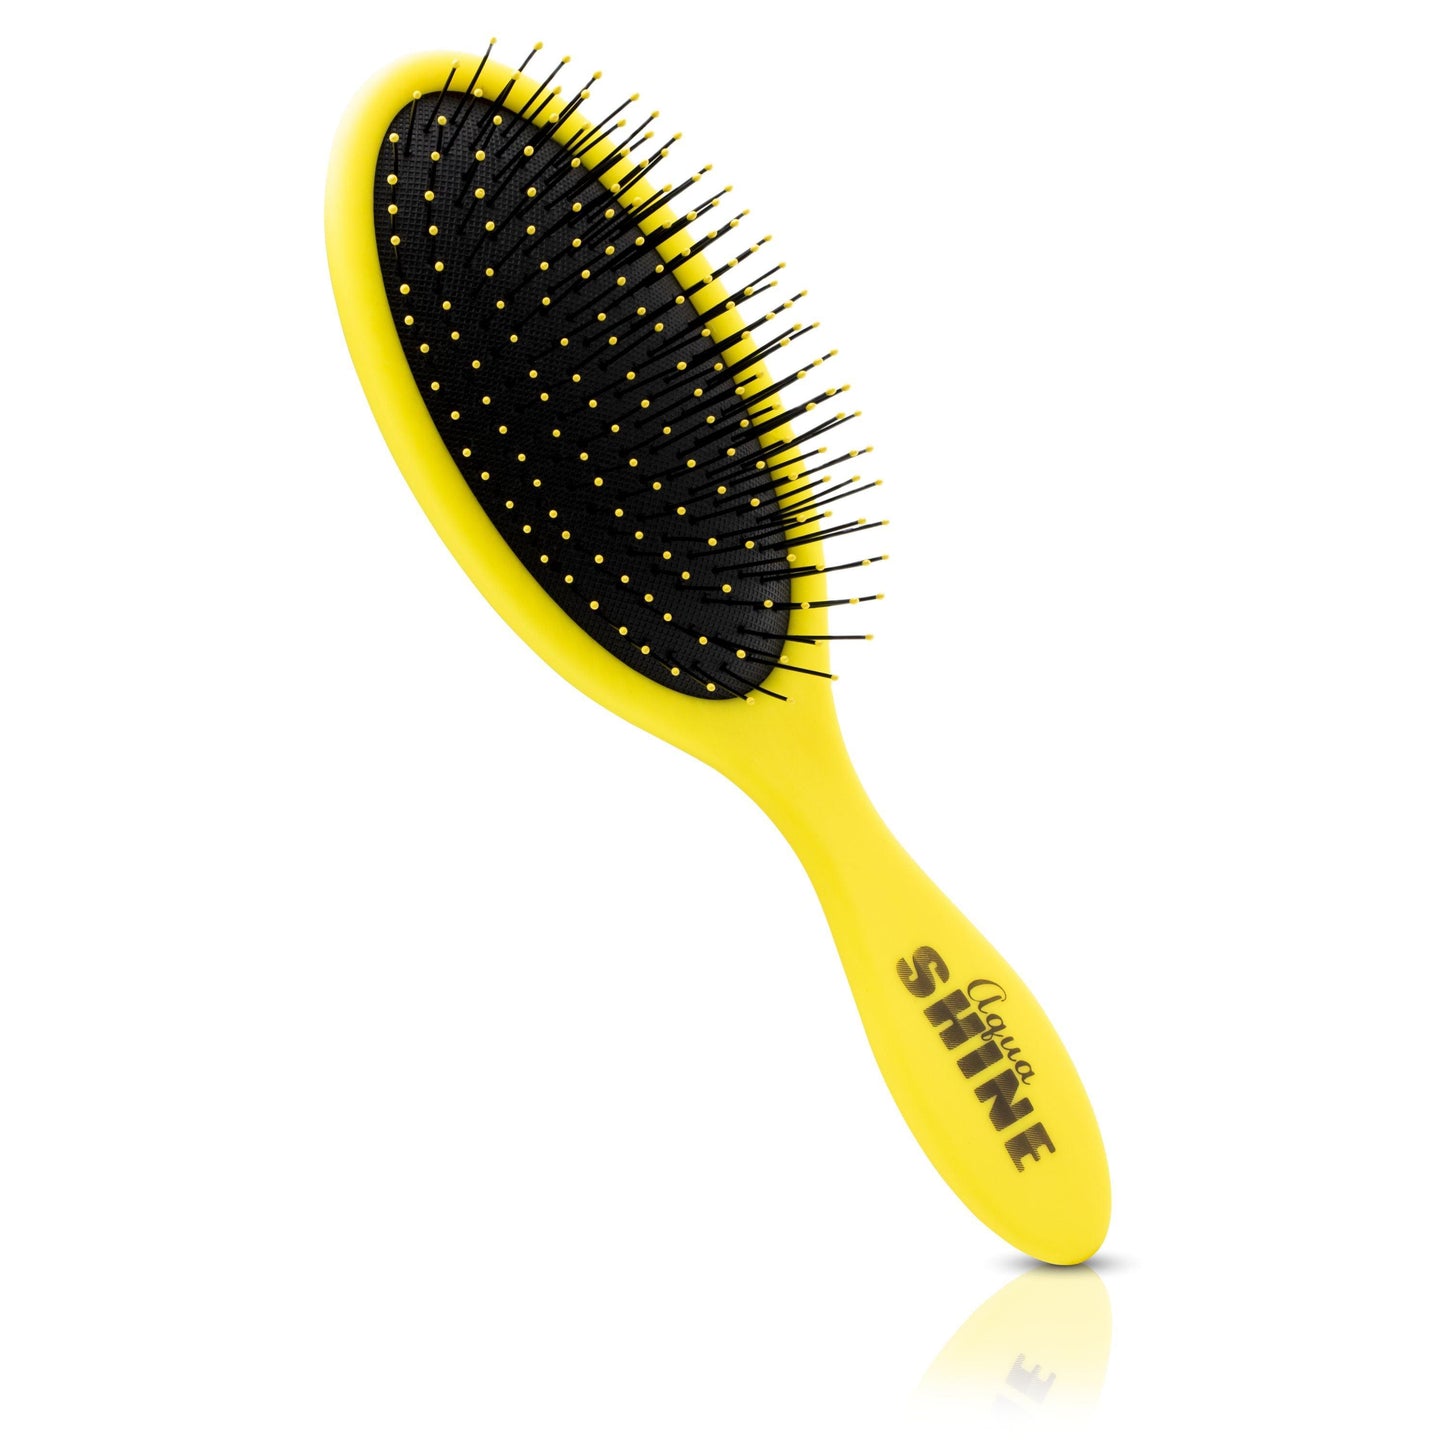 AquaShine Wet & Dry Soft-Touch Paddle Hair Brush by VYSN